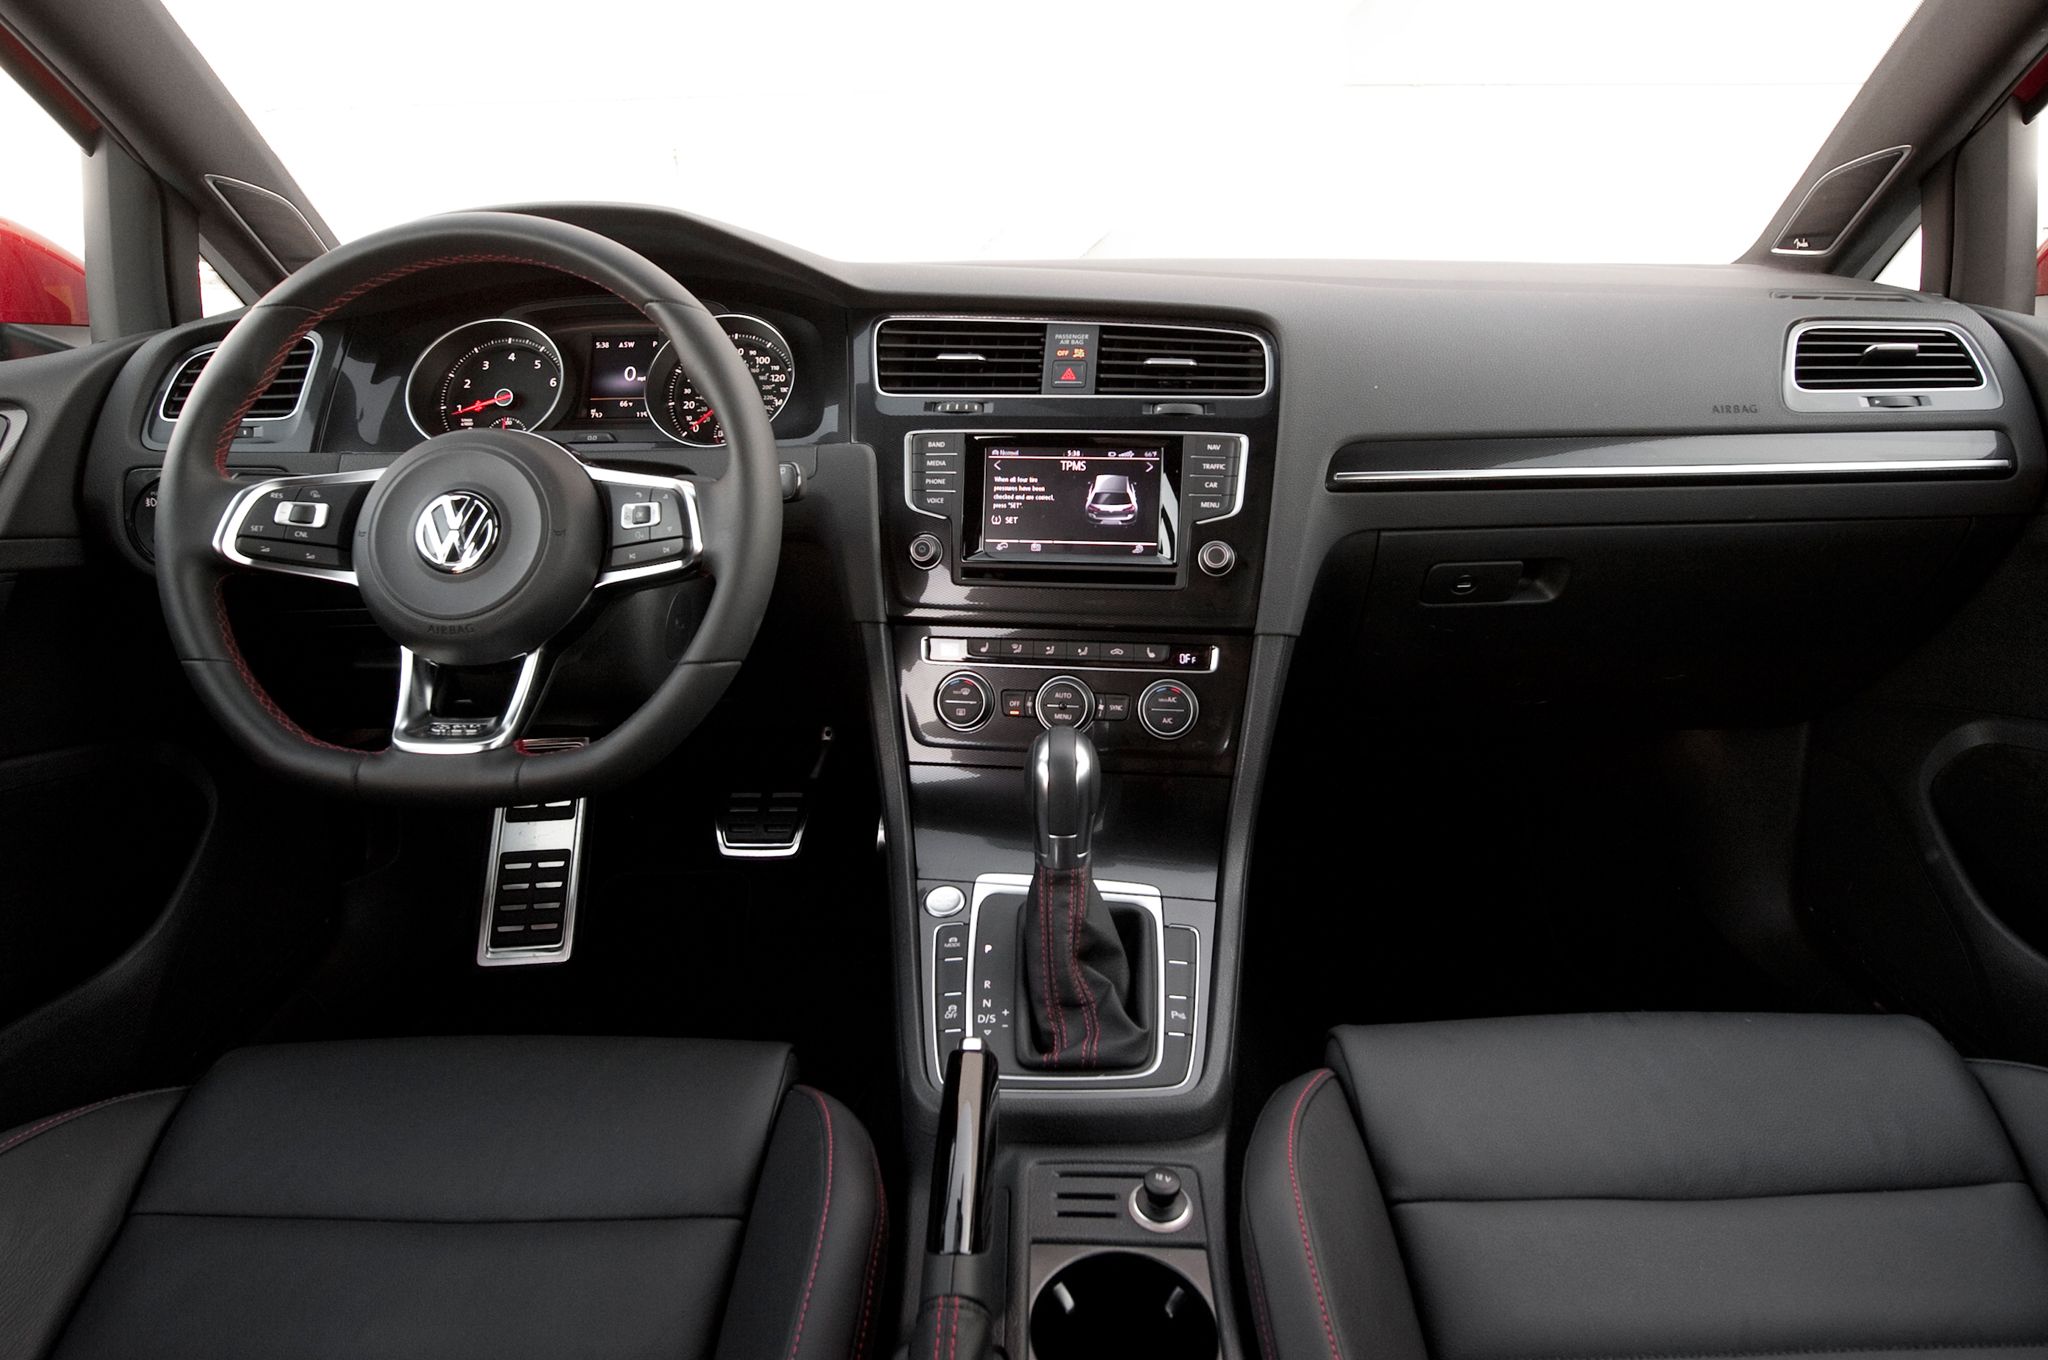 2015 Volkswagen Golf Gti Interior Dashboard And Cockpit (View 20 of 55)